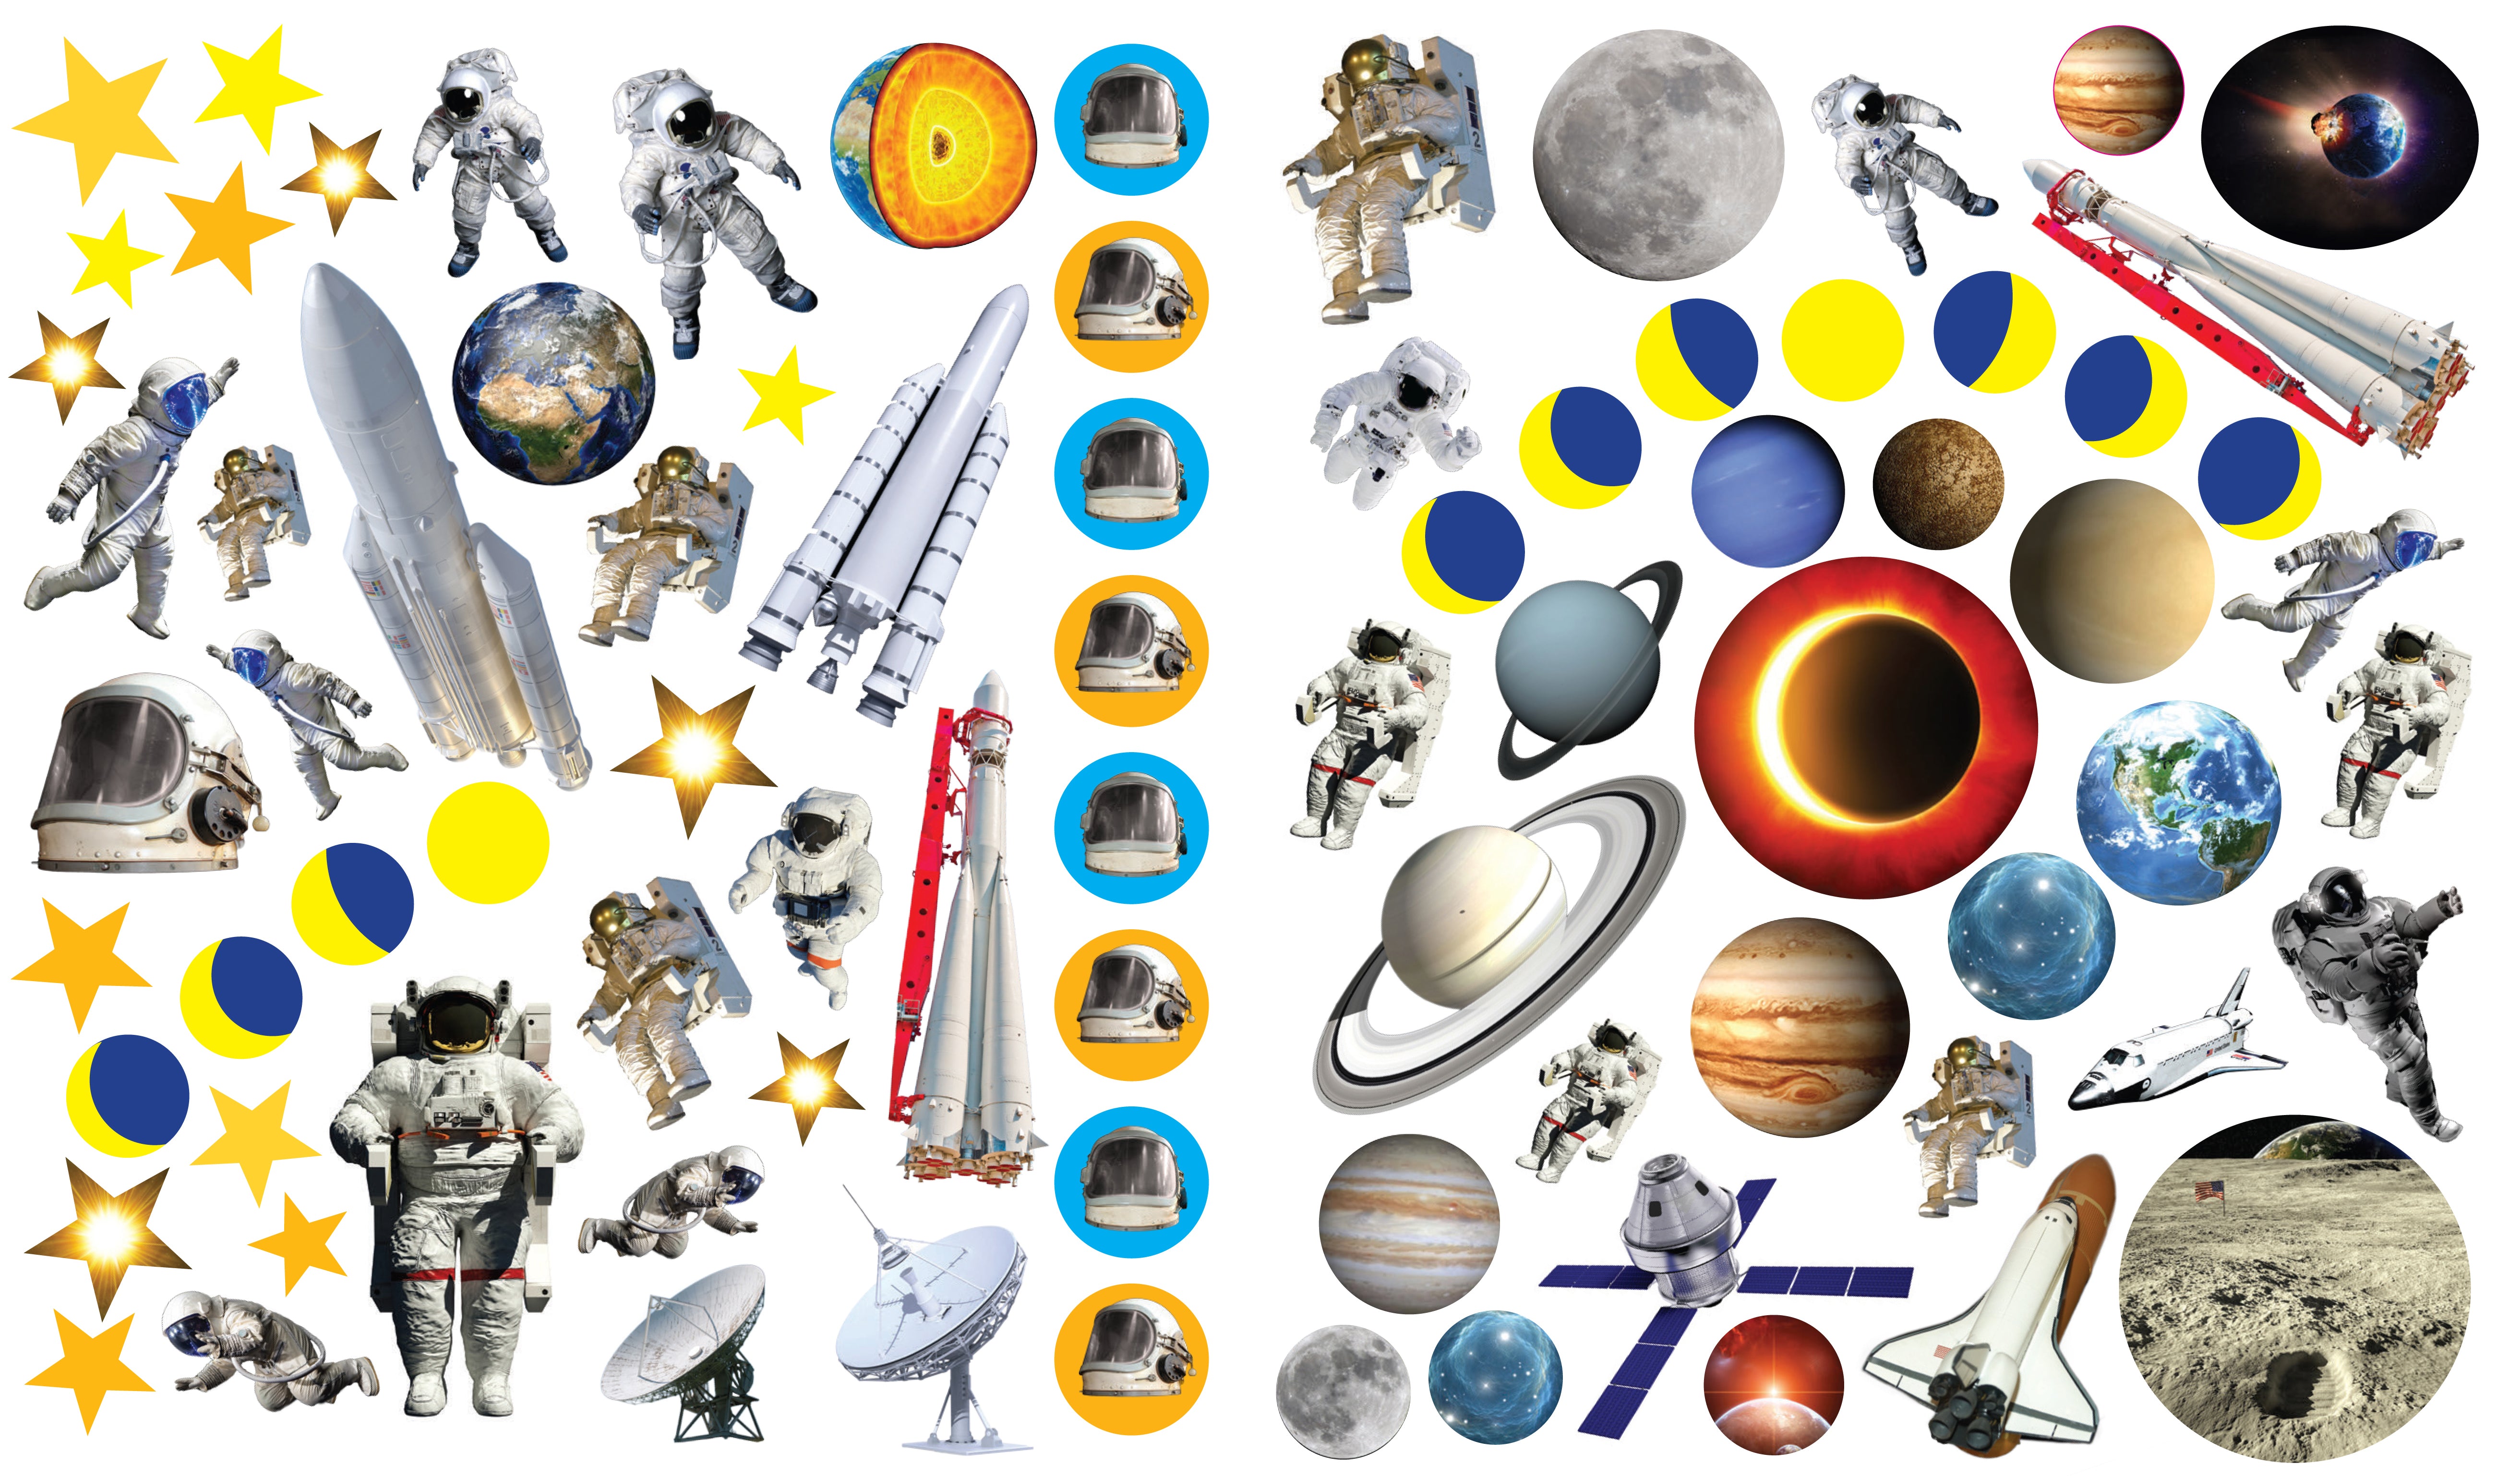 solar system stickers books